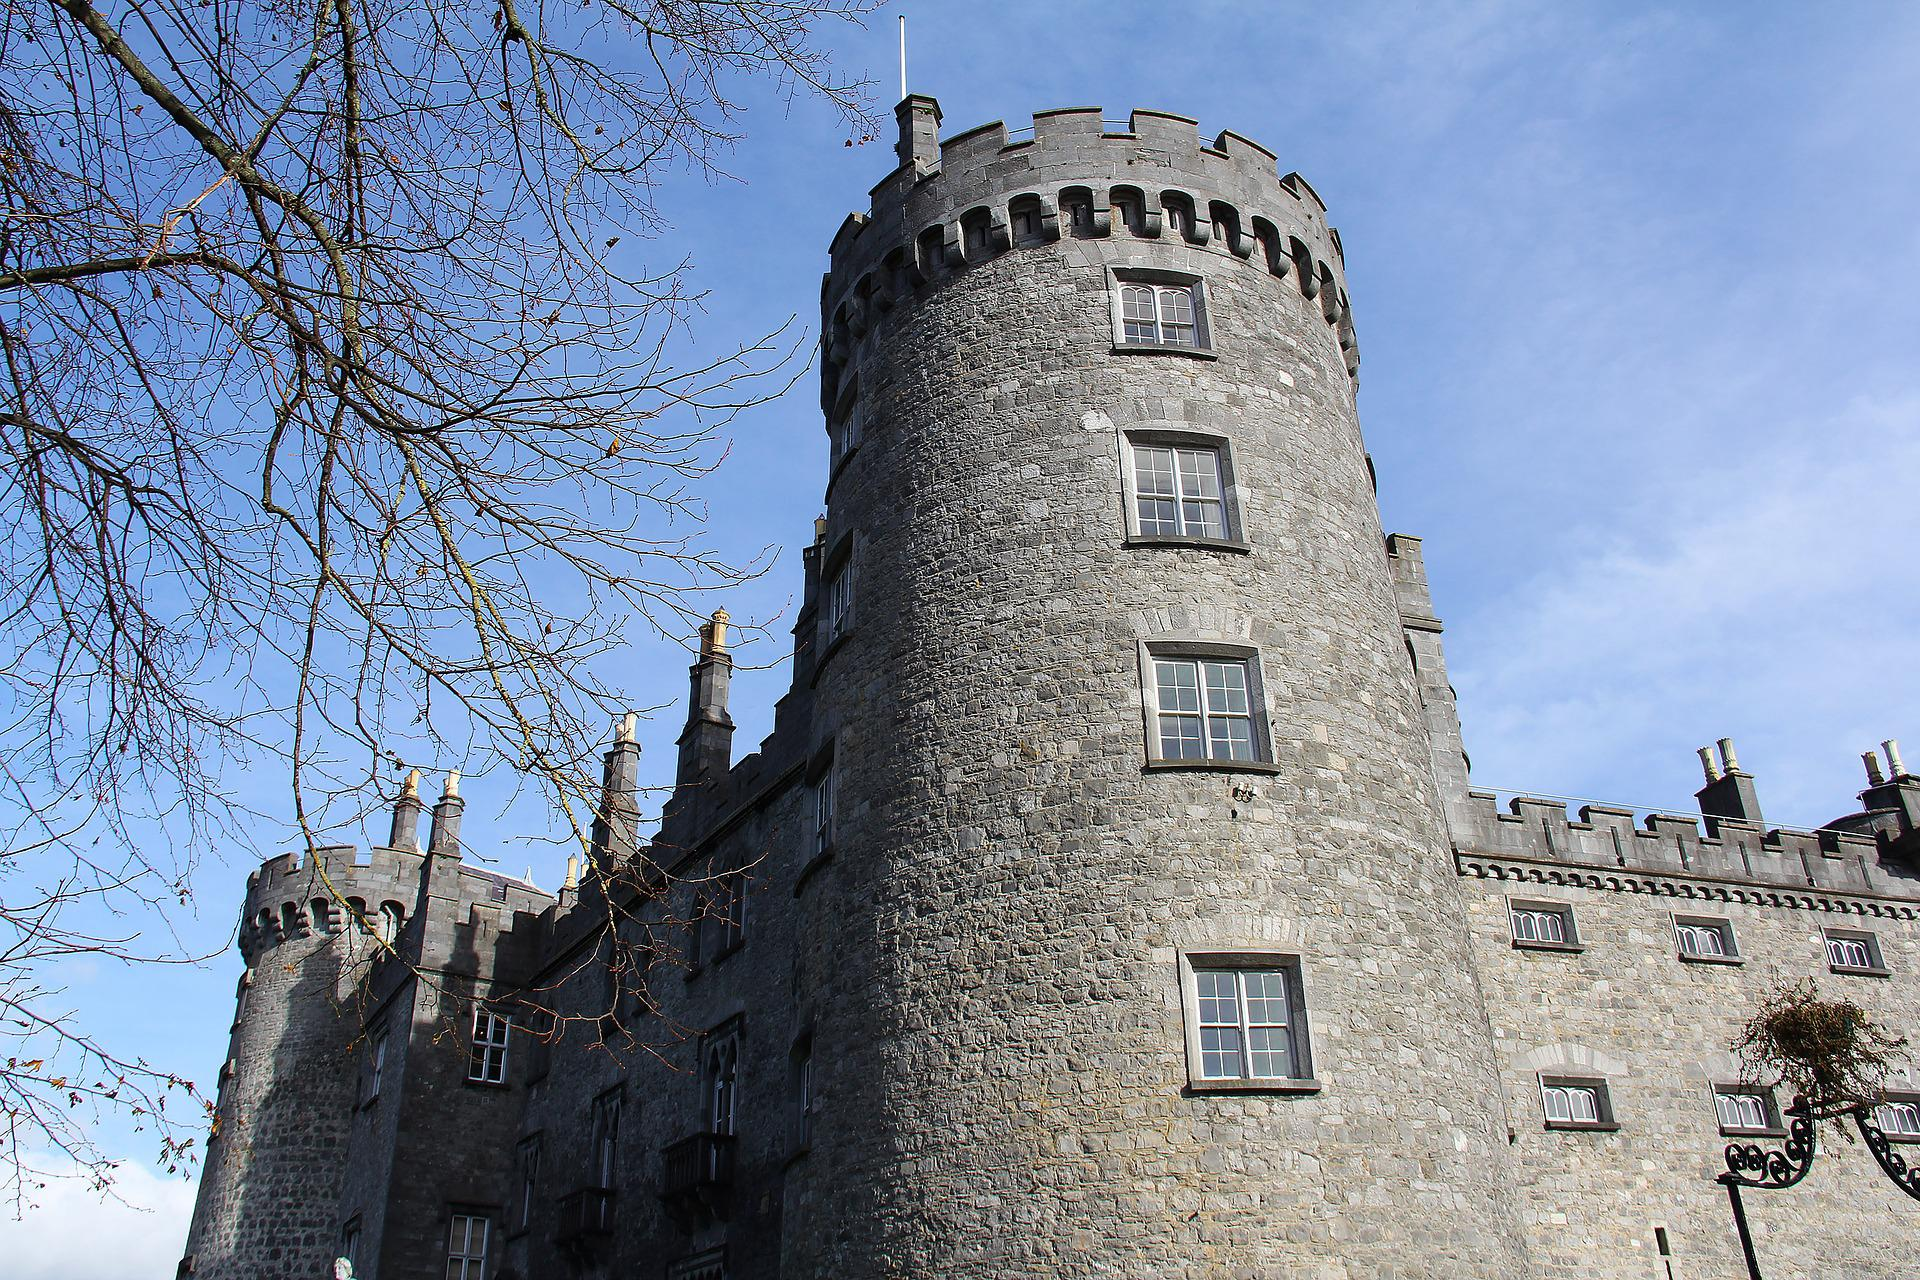 Kilkenny Castle in a heritage tour in Ireland